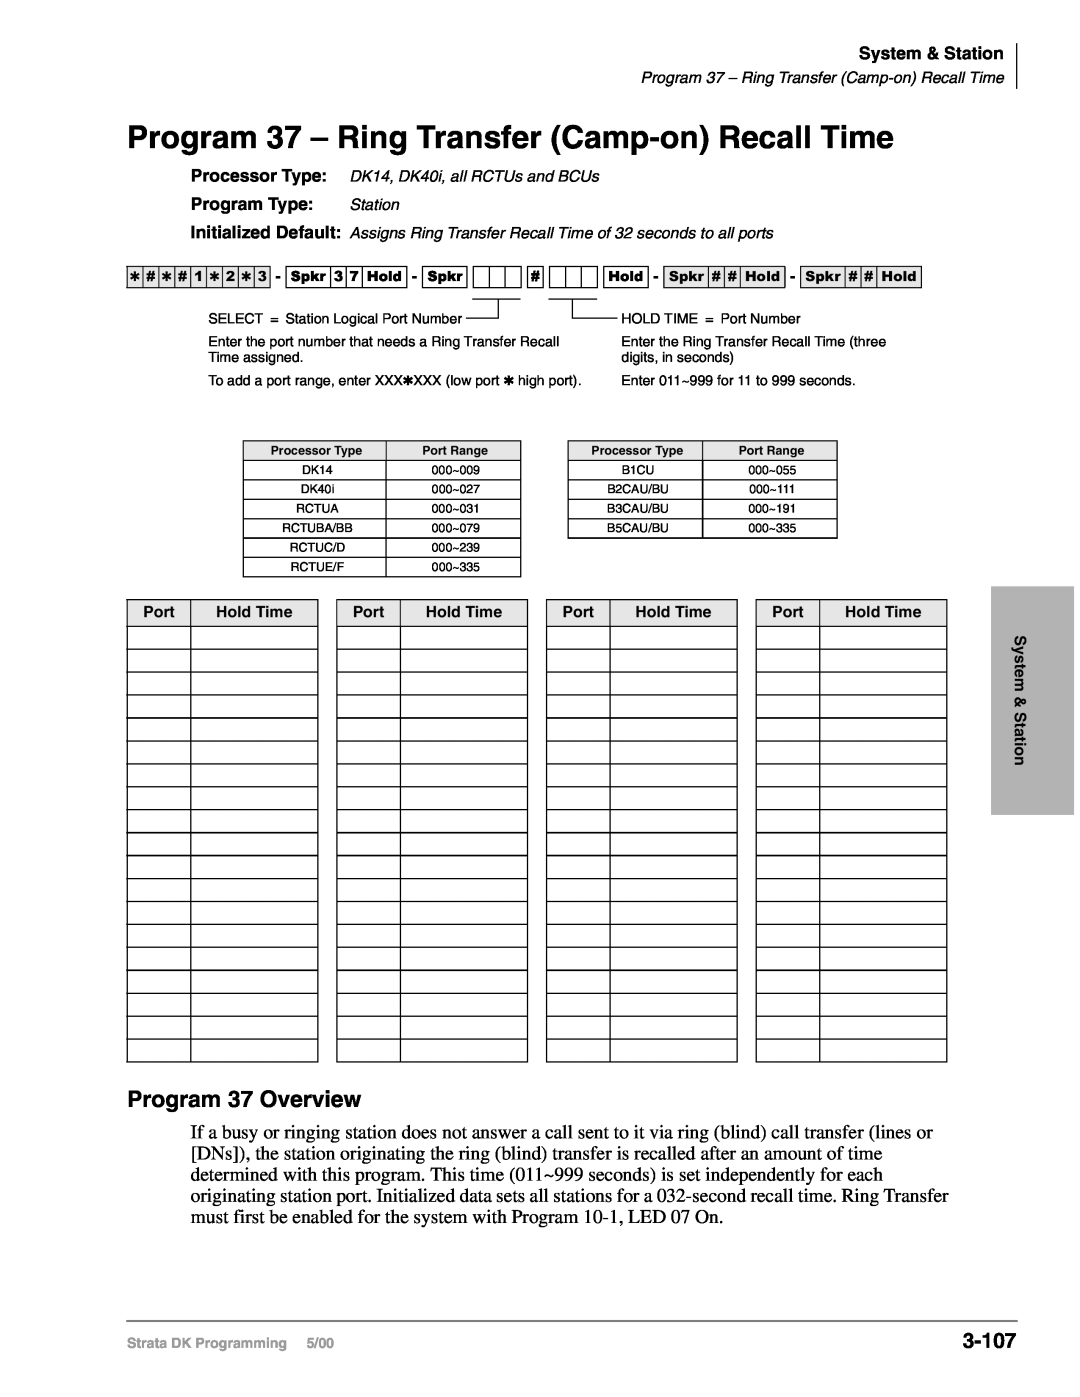 Toshiba DK424I, dk14, DK40I manual Program 37 – Ring Transfer Camp-onRecall Time, Program 37 Overview, 3-107 